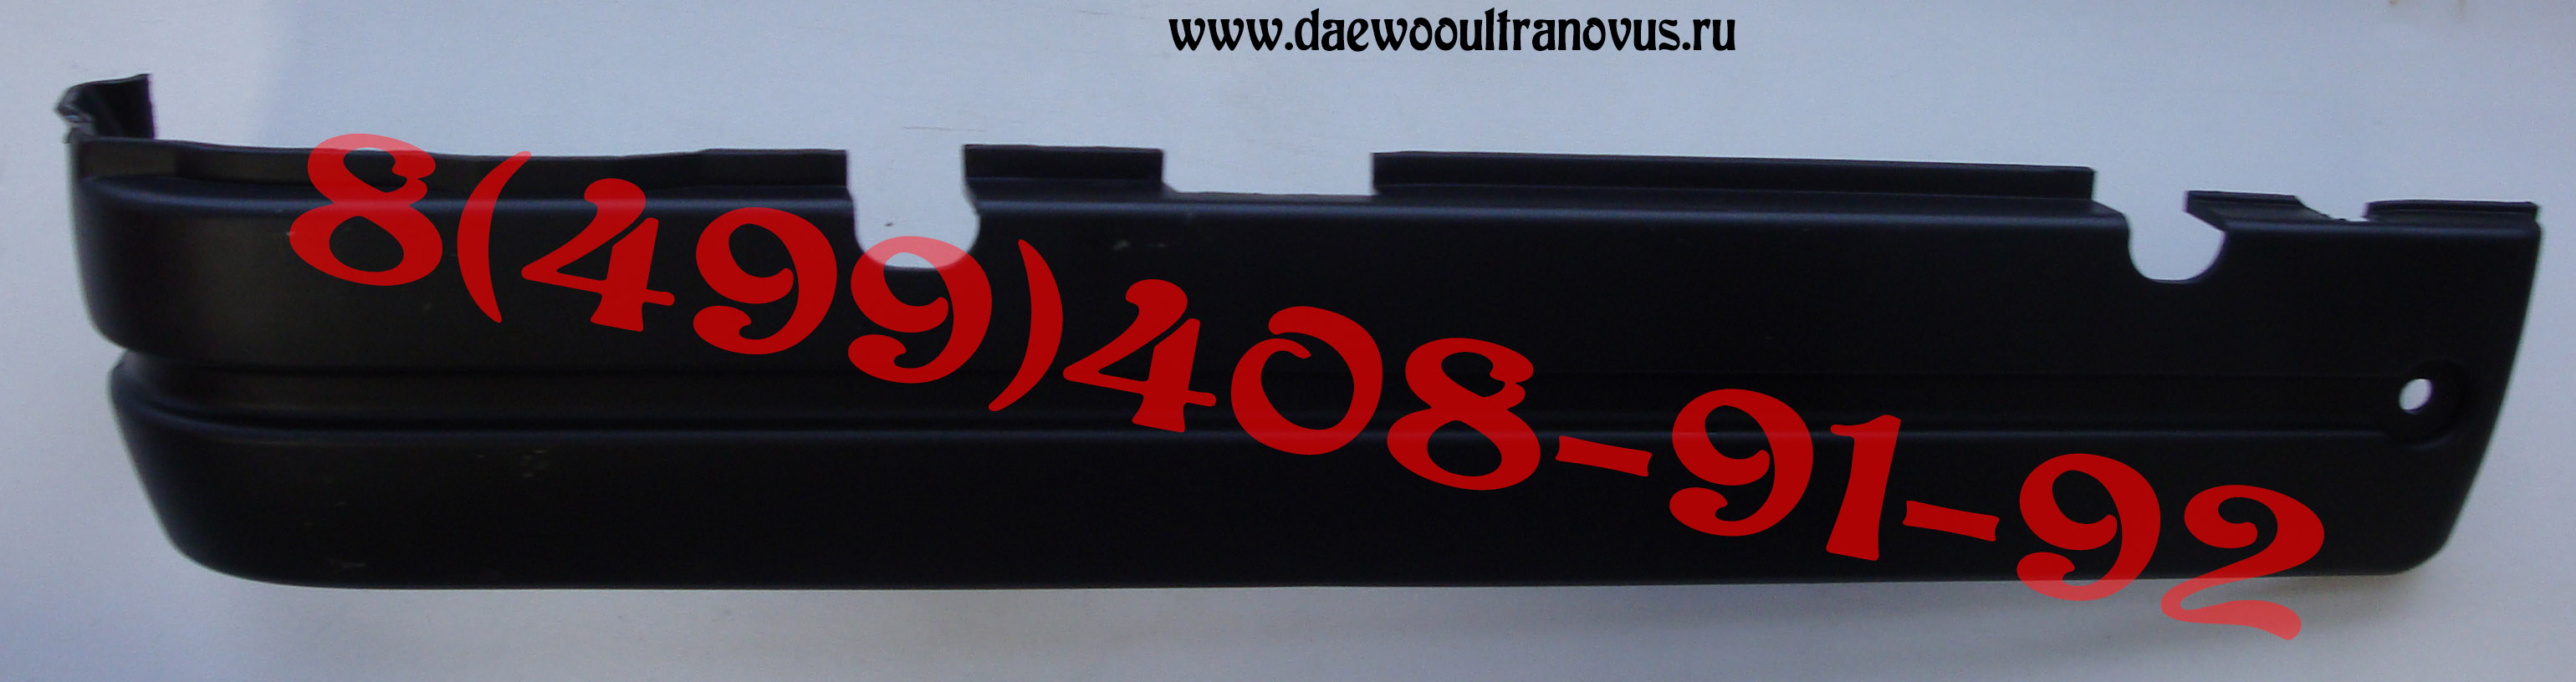 Ресничка фары левая 35411-00280 на Daewoo Novus